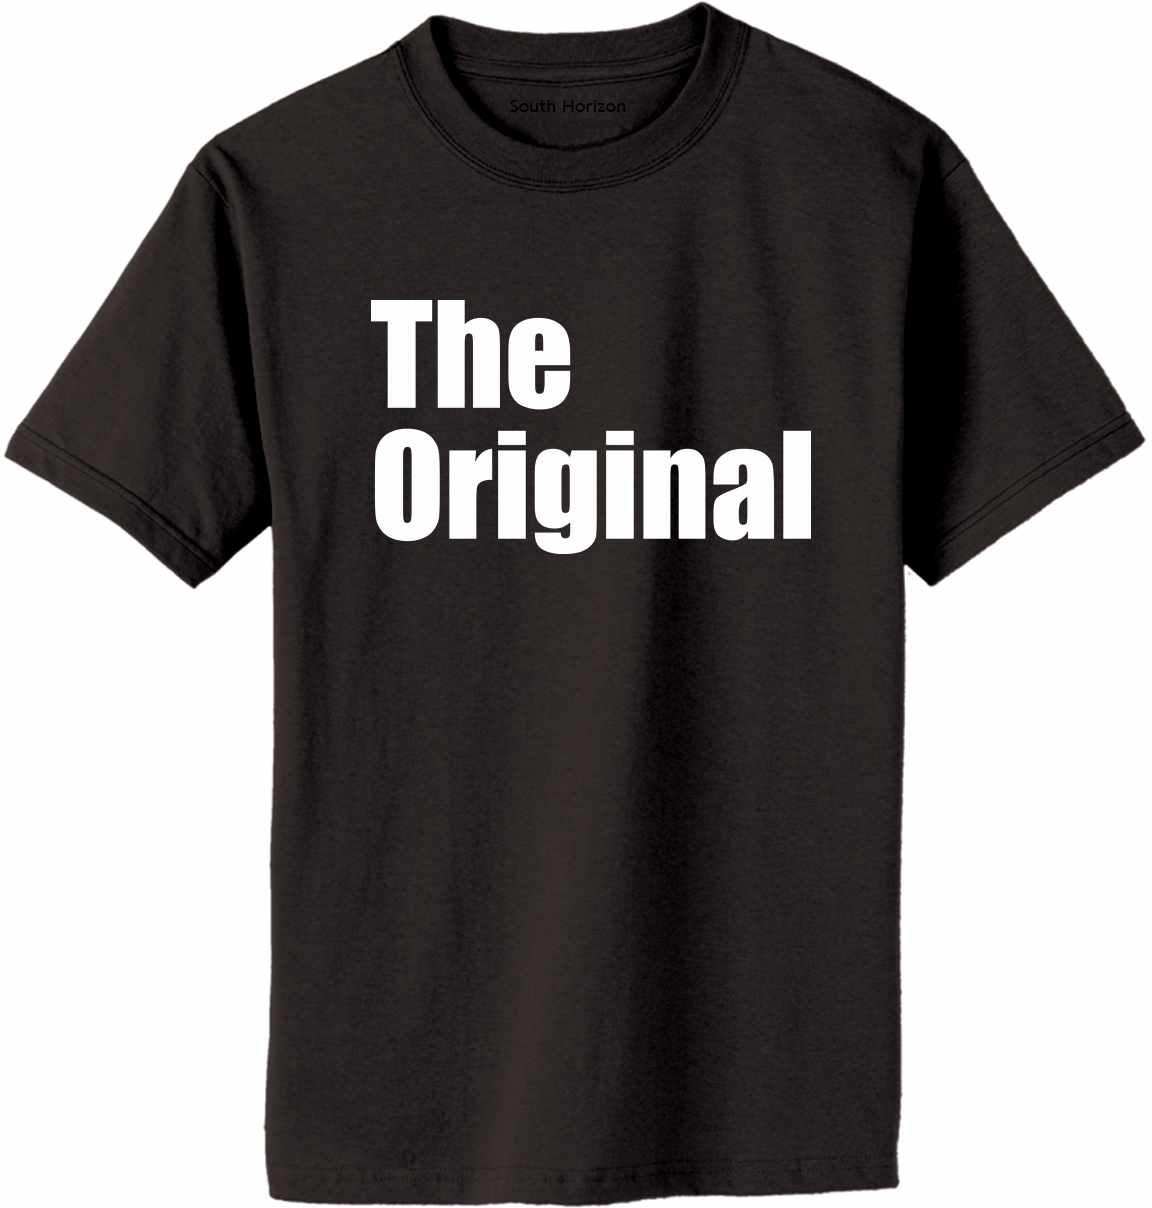 The Original on Adult T-Shirt